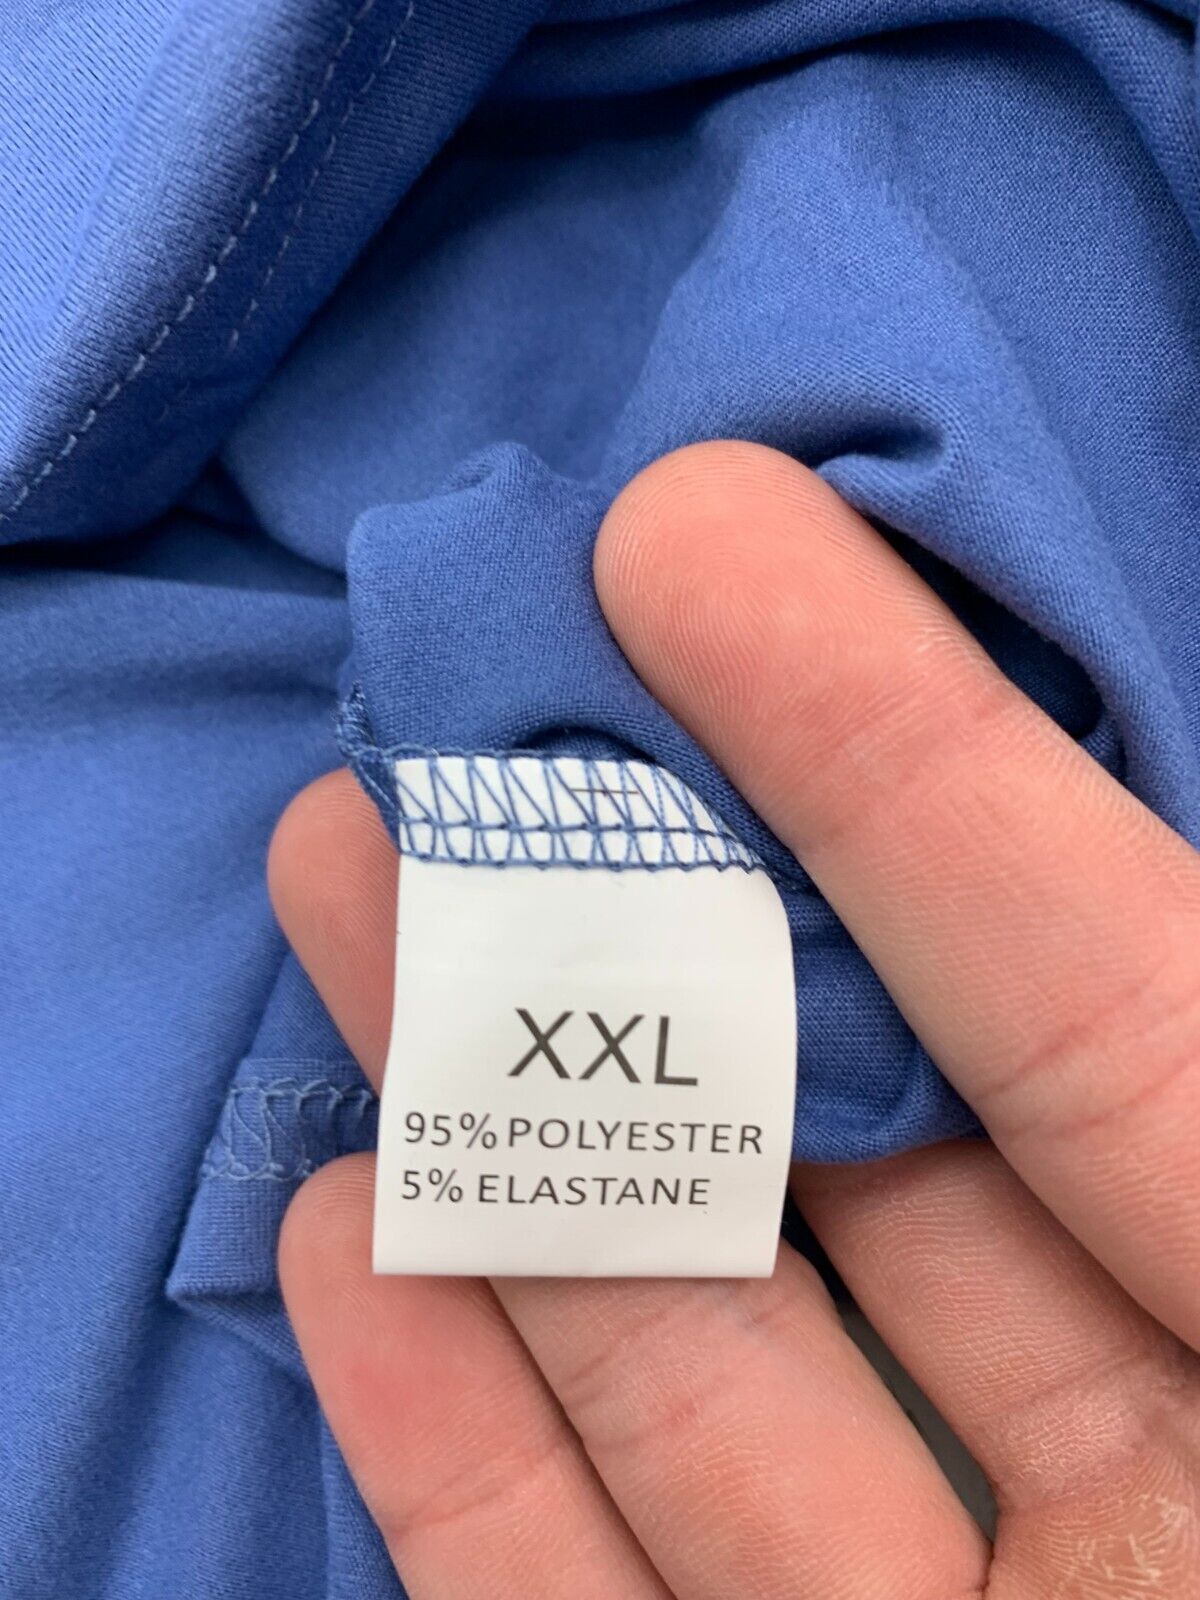 Hanes Womens Blue Long Sleeve Shirt Size XXL - beyond exchange